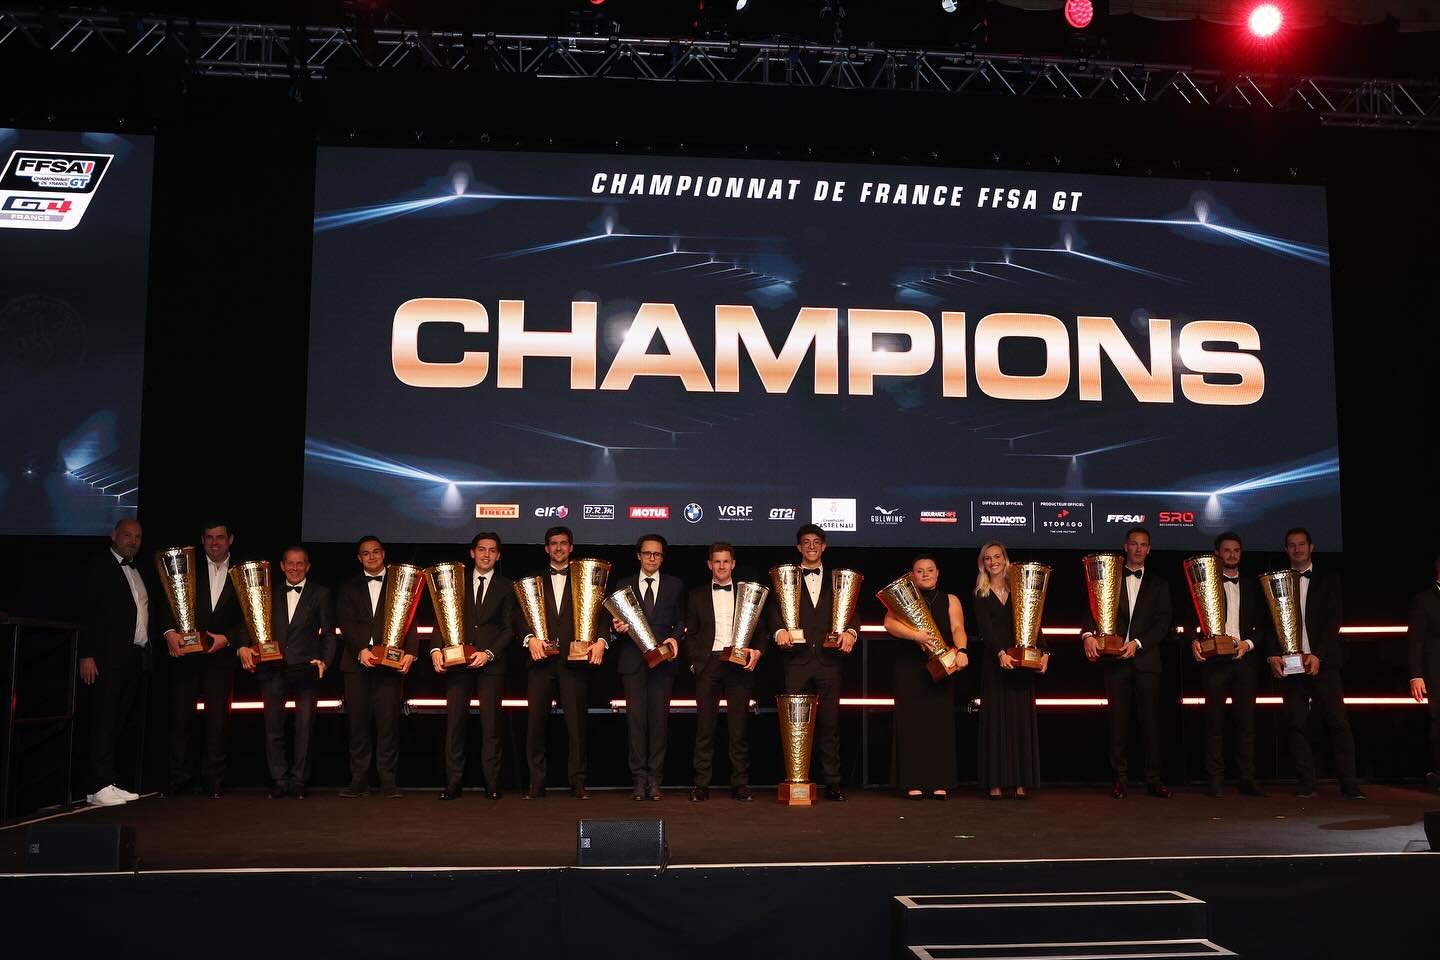 GTA ceremonie champions